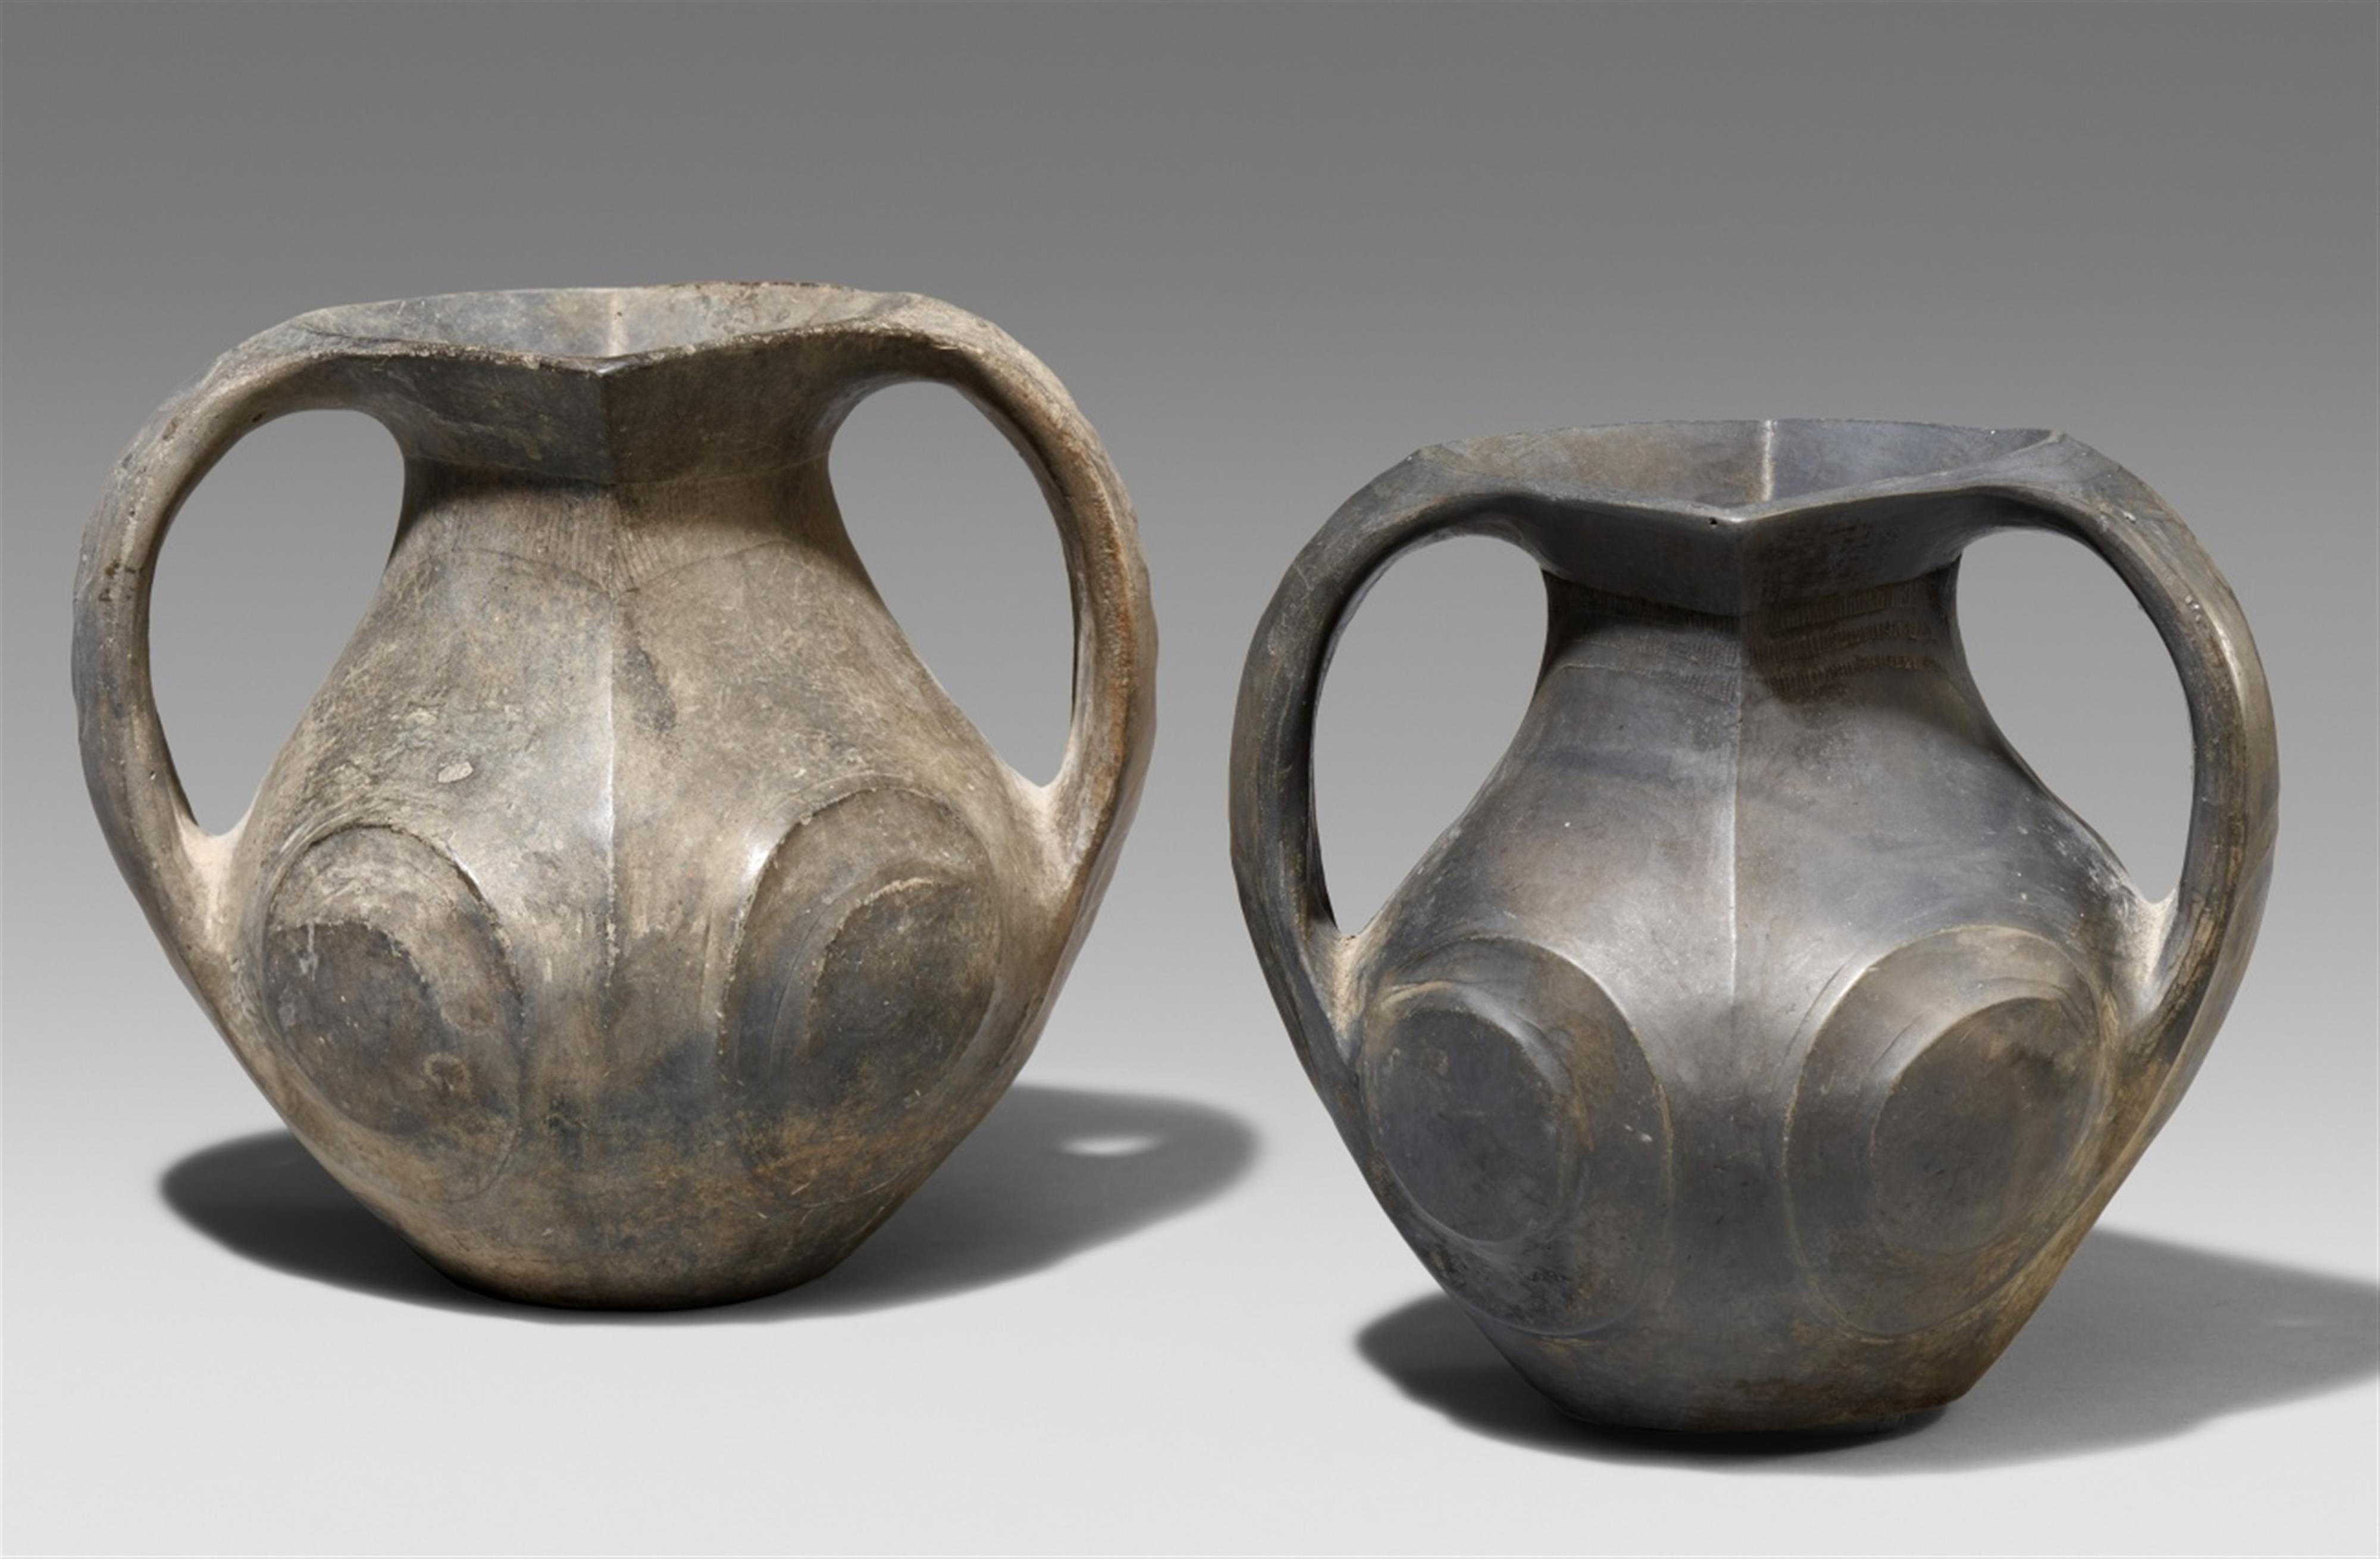 A Sichuan black pottery amphora. Han dynasty (206 BC-220 AD) - image-1